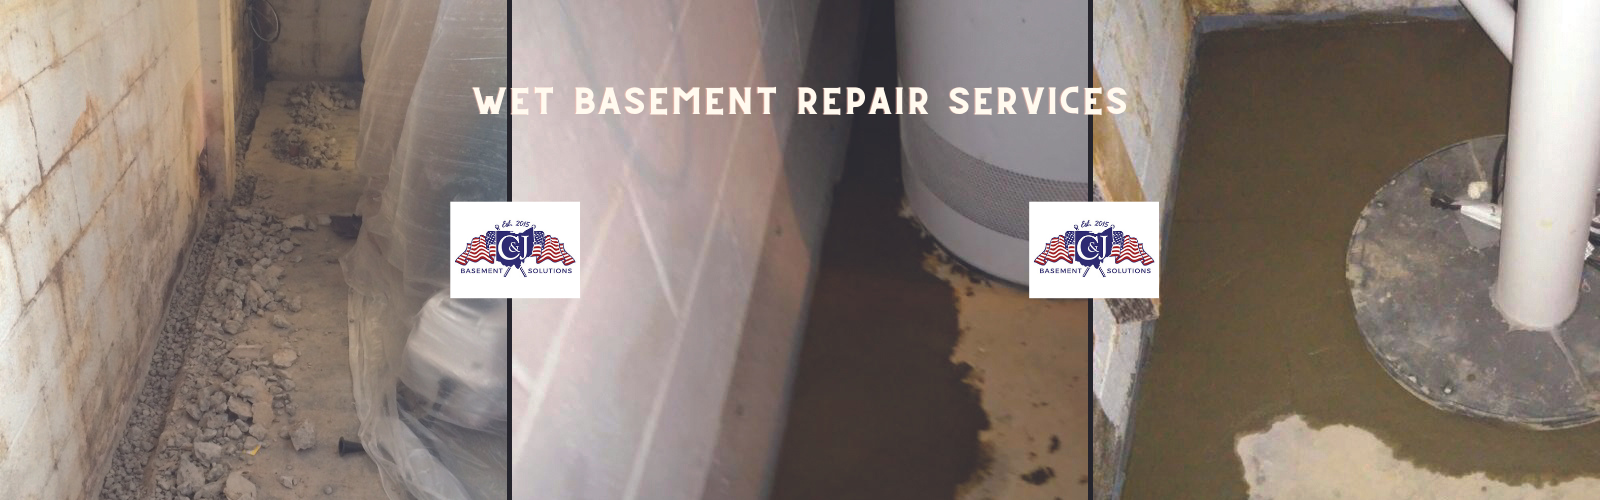 wet basement repair services near me examples